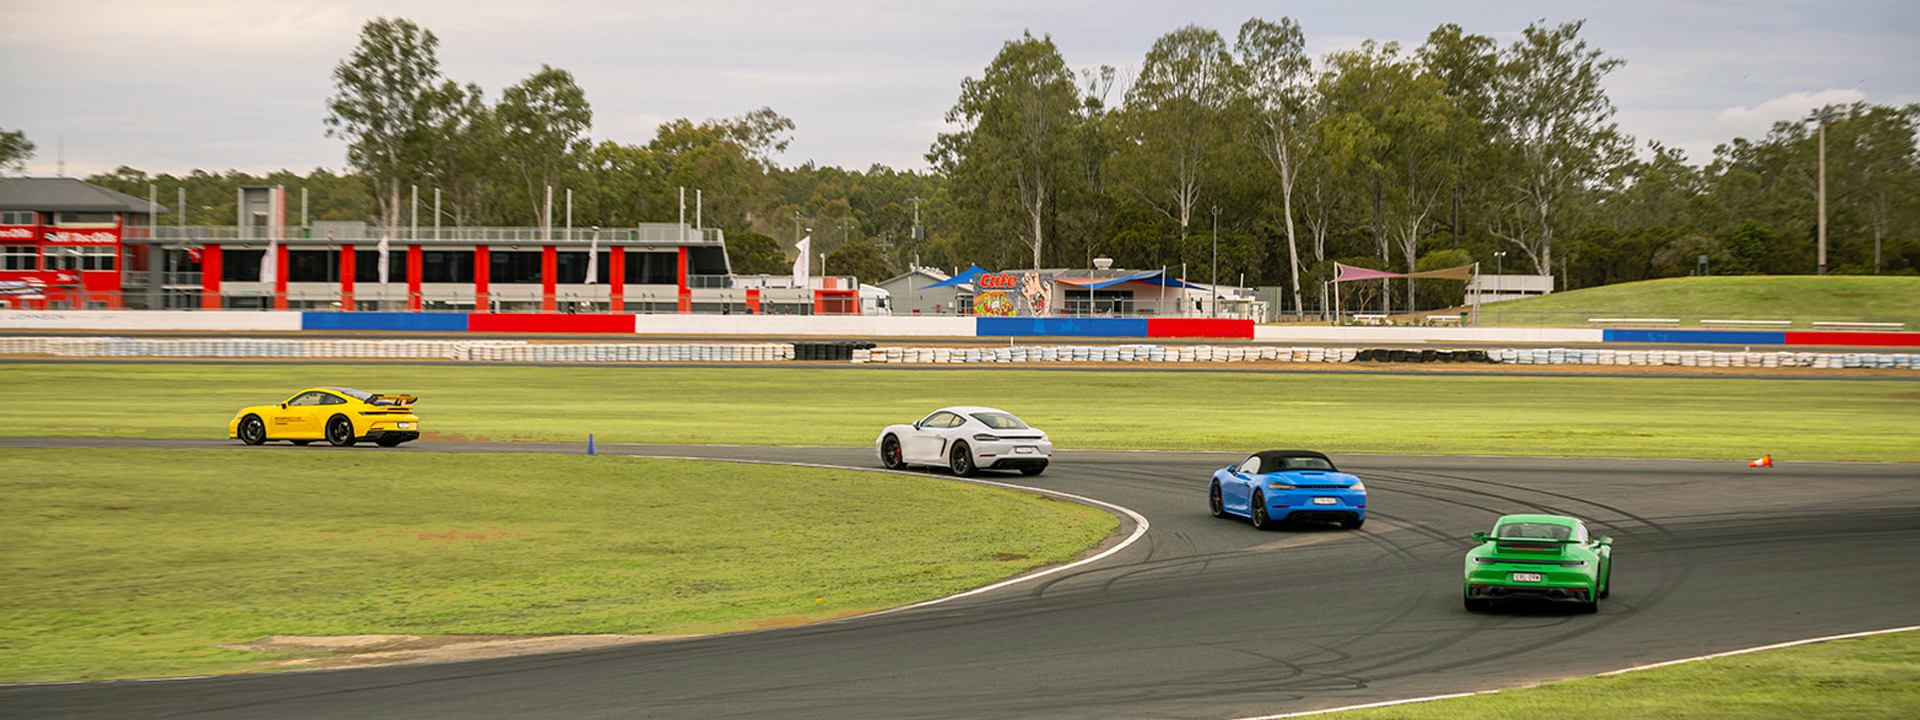 Porsche Advanced Driver Training, Porsche Centre Gold Coast, Queensland Raceway